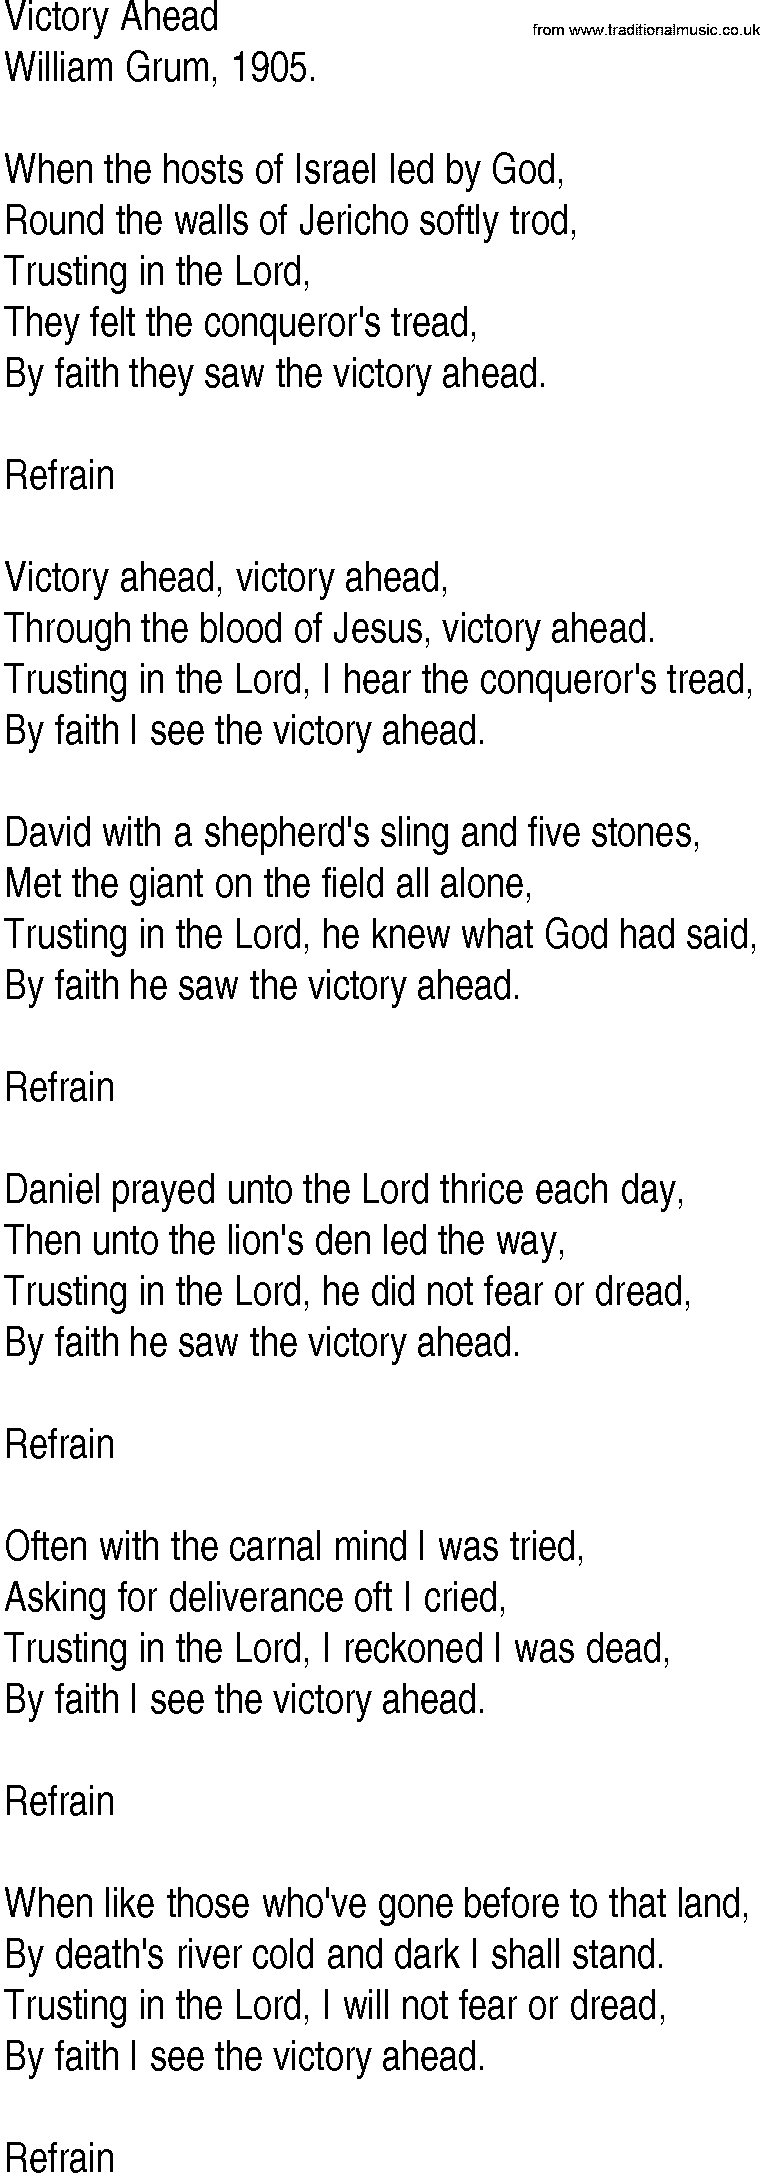 Hymn and Gospel Song: Victory Ahead by William Grum lyrics